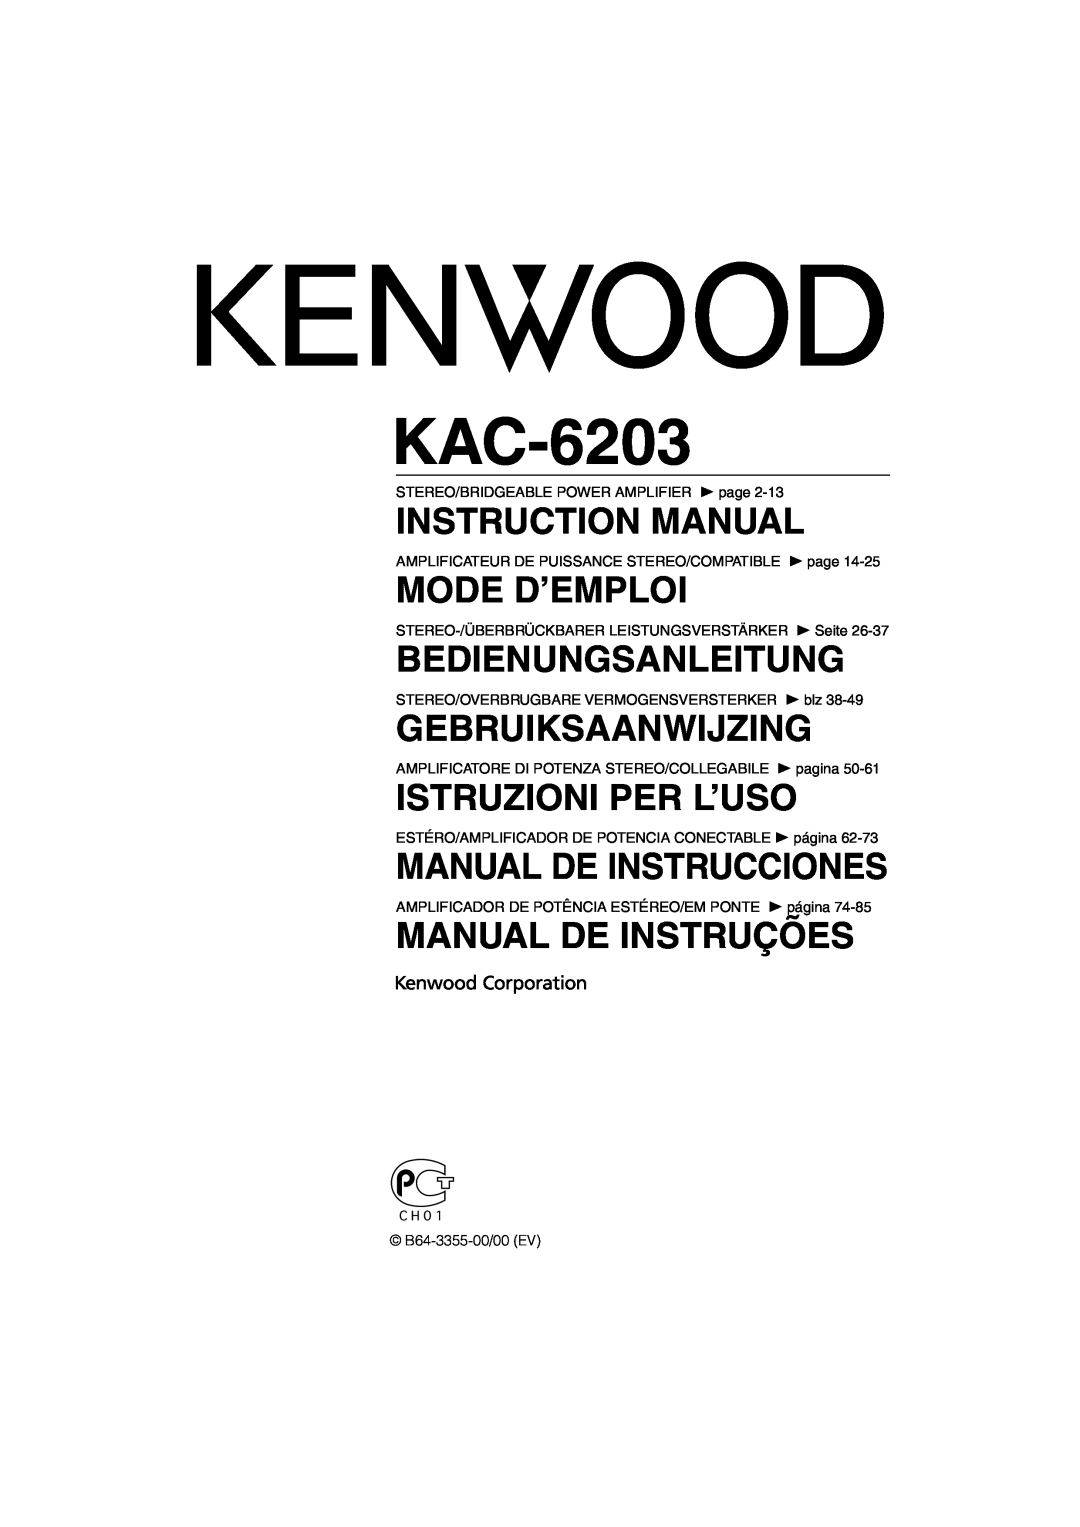 Kenwood KAC-6203 instruction manual Instruction Manual, Stereo/Bridgeable Power Amplifier, B64-3356-00/00 MV 